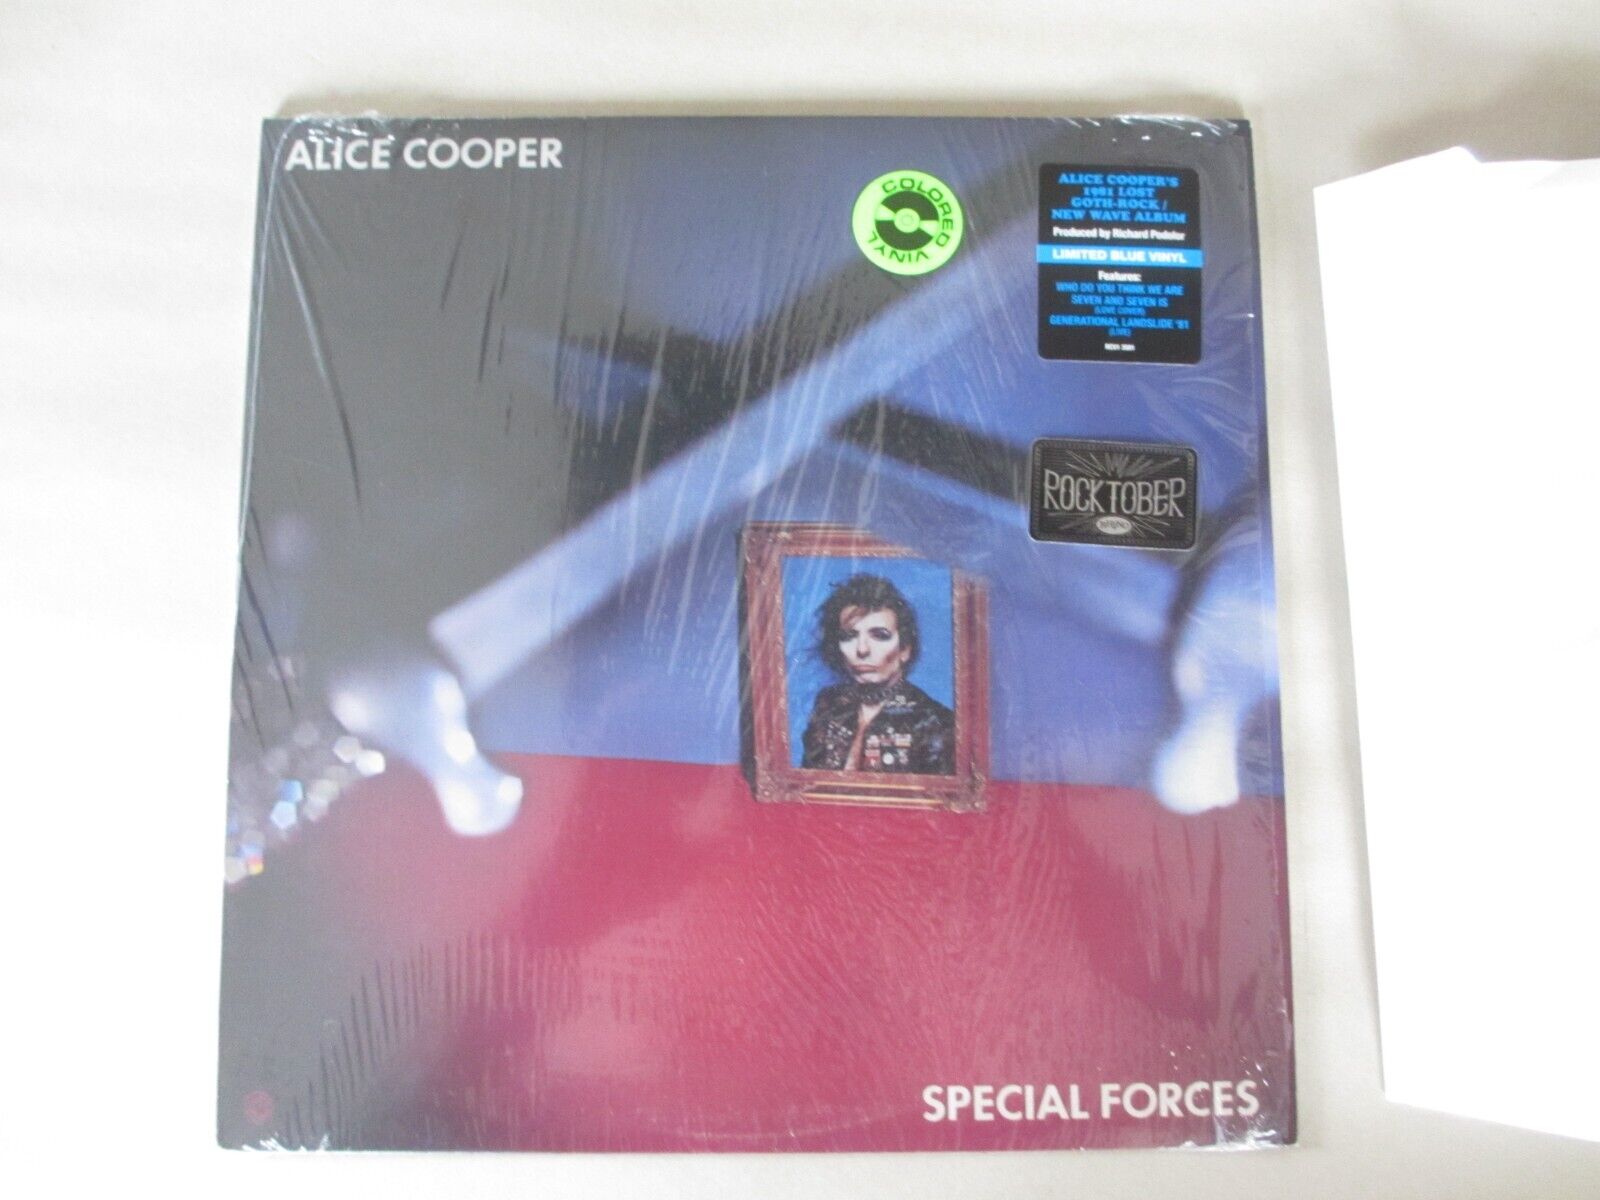 popsike.com - ALICE COOPER - SPECIAL FORCES COLORED LP - BLUE VINYL -  ROCKTOBER - auction details